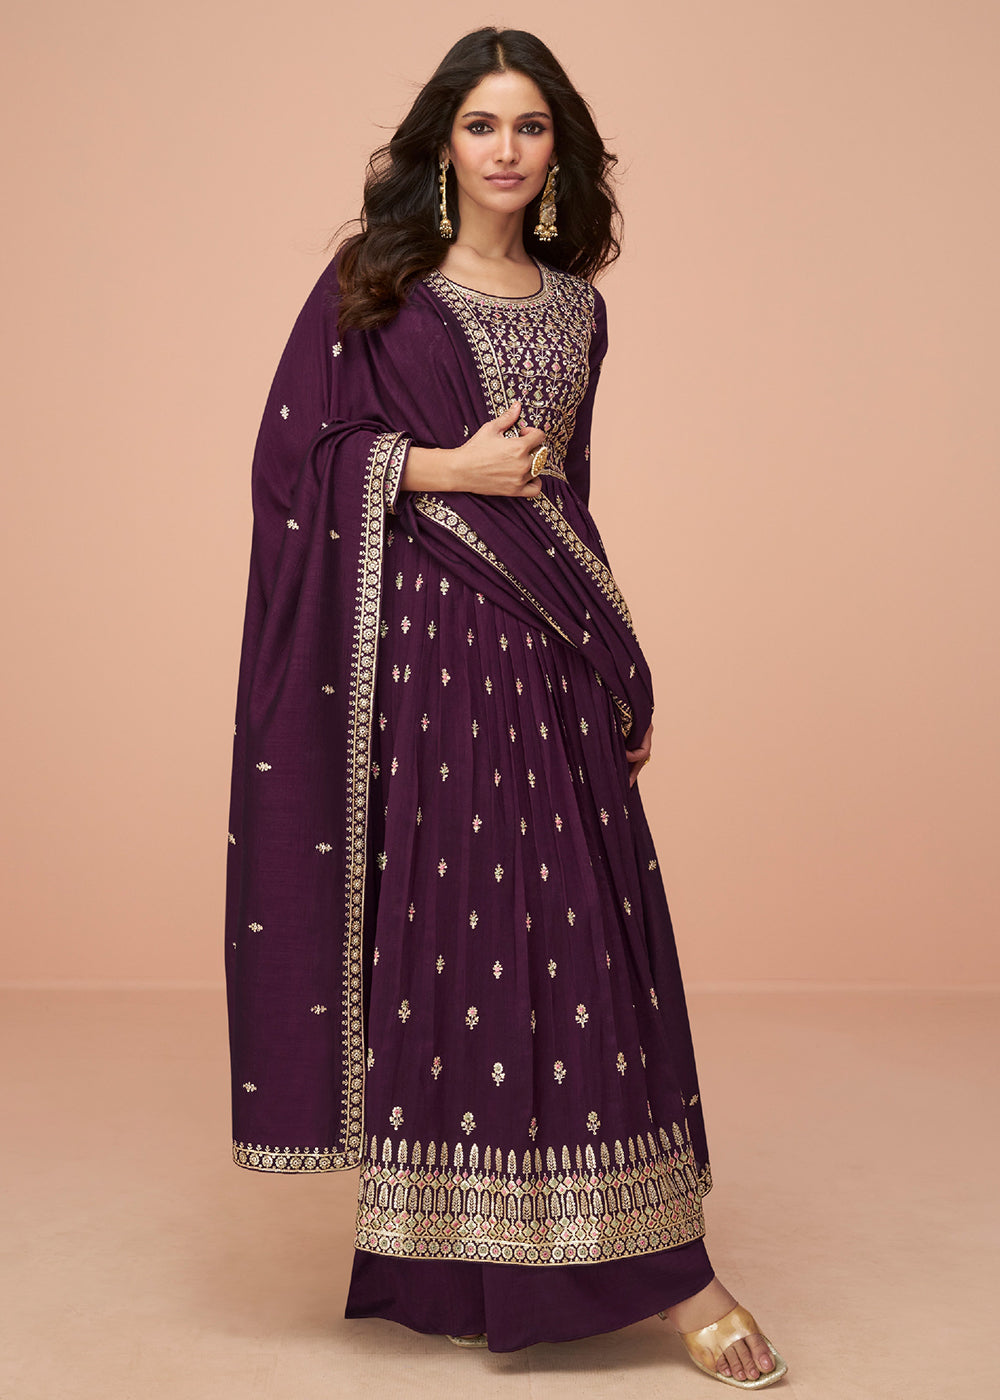 Buy Now Burgundy Purple Wedding Wear Silk Trendy Palazzo Suit Online in USA, UK, Canada, Germany, Australia & Worldwide at Empress Clothing.